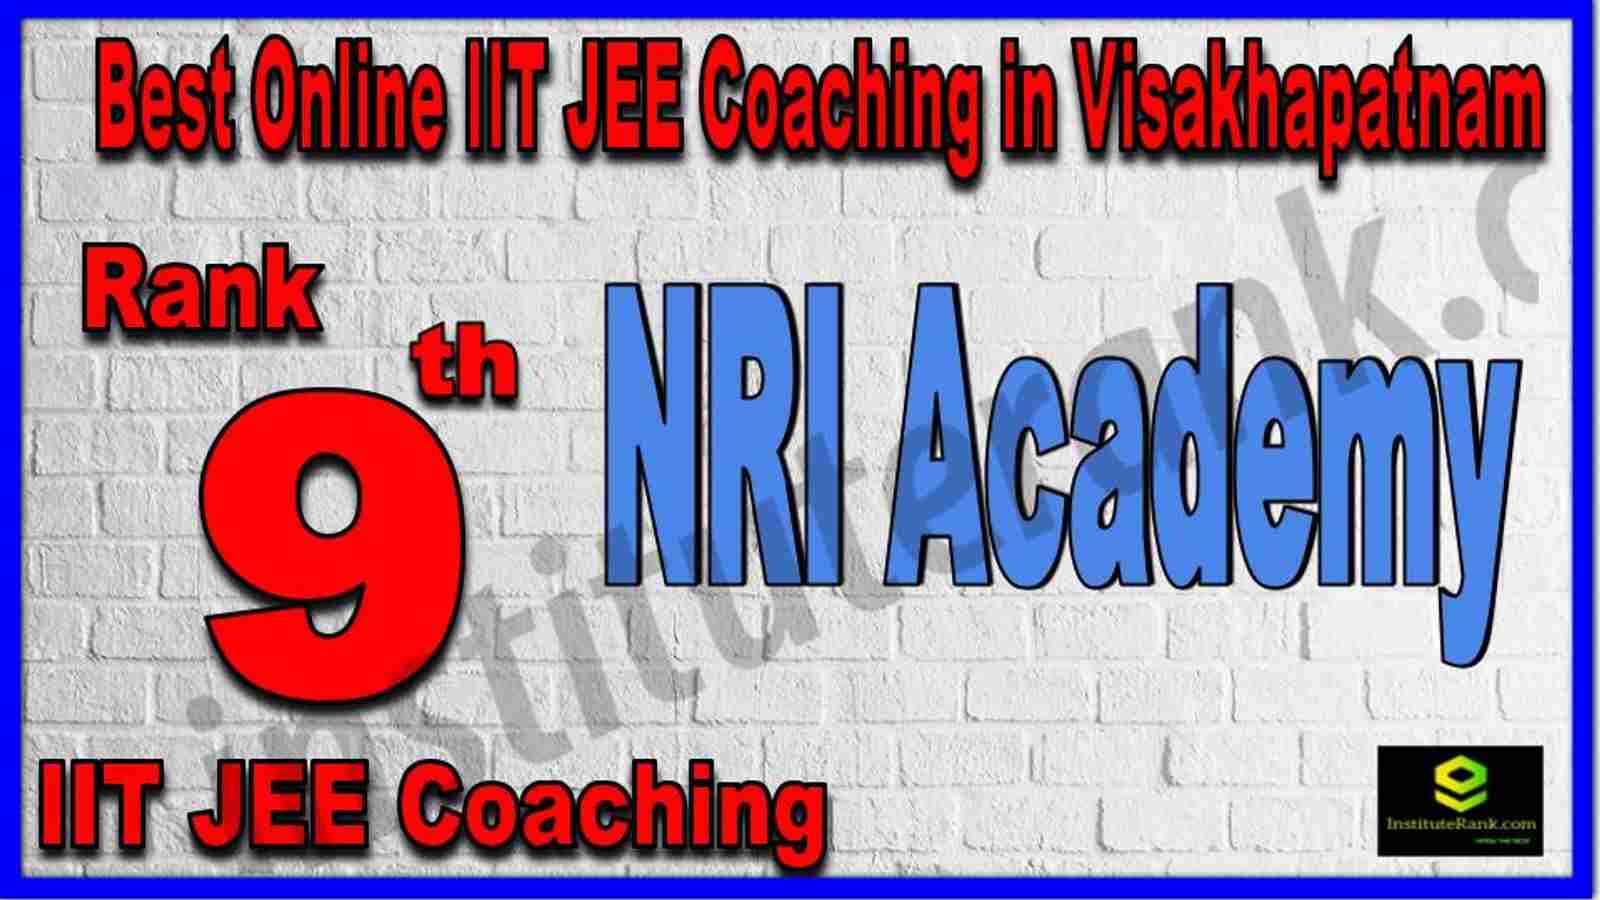 Rank 9th Best Online IIT JEE Coaching in Visakhapatnam